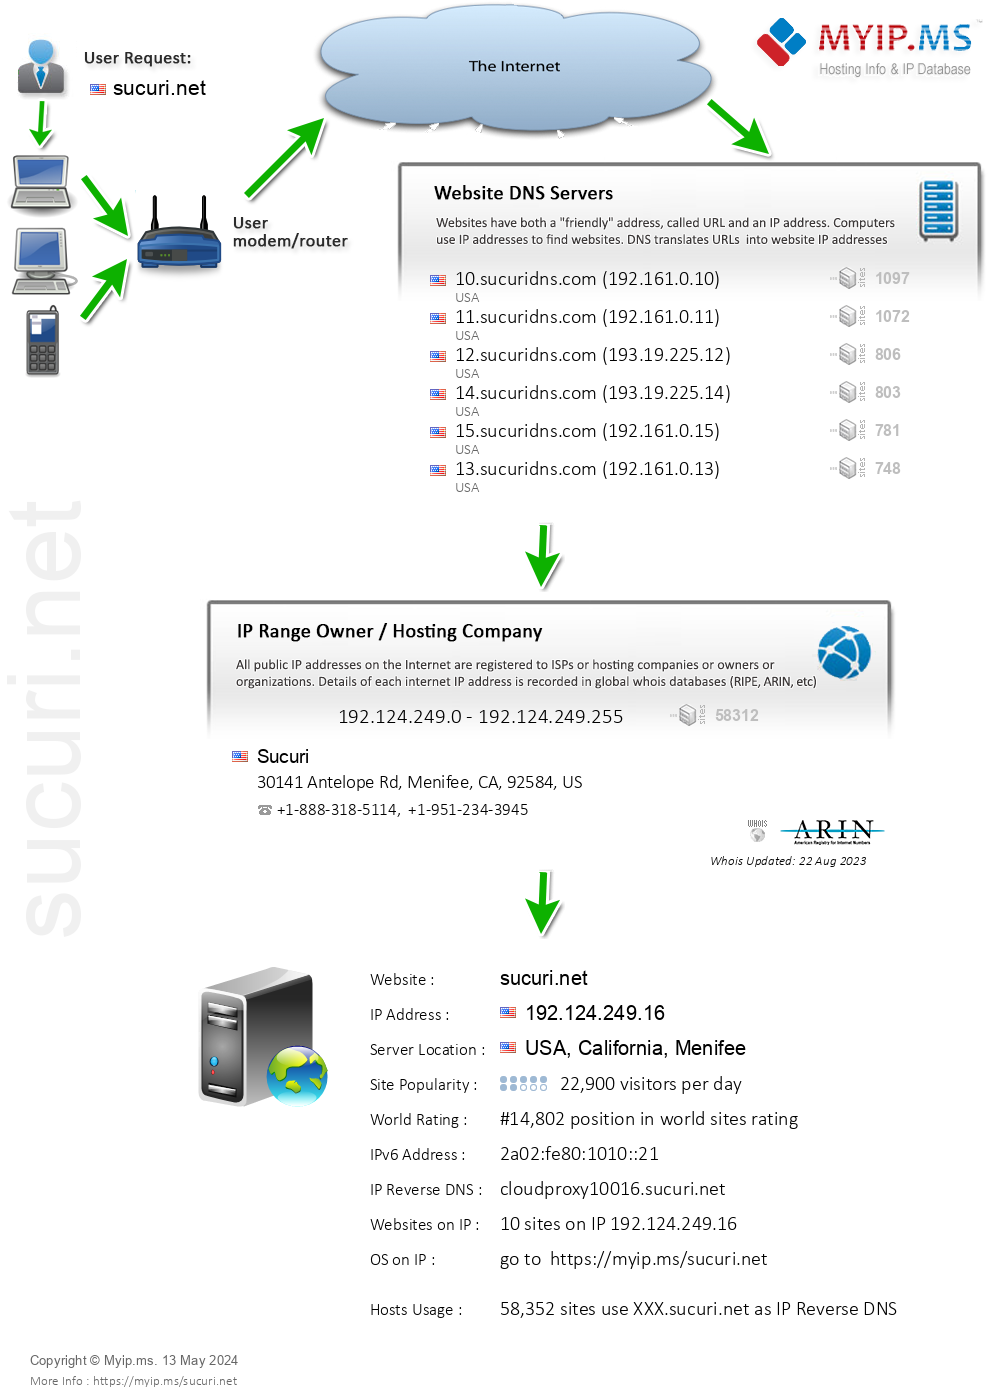 Sucuri.net - Website Hosting Visual IP Diagram